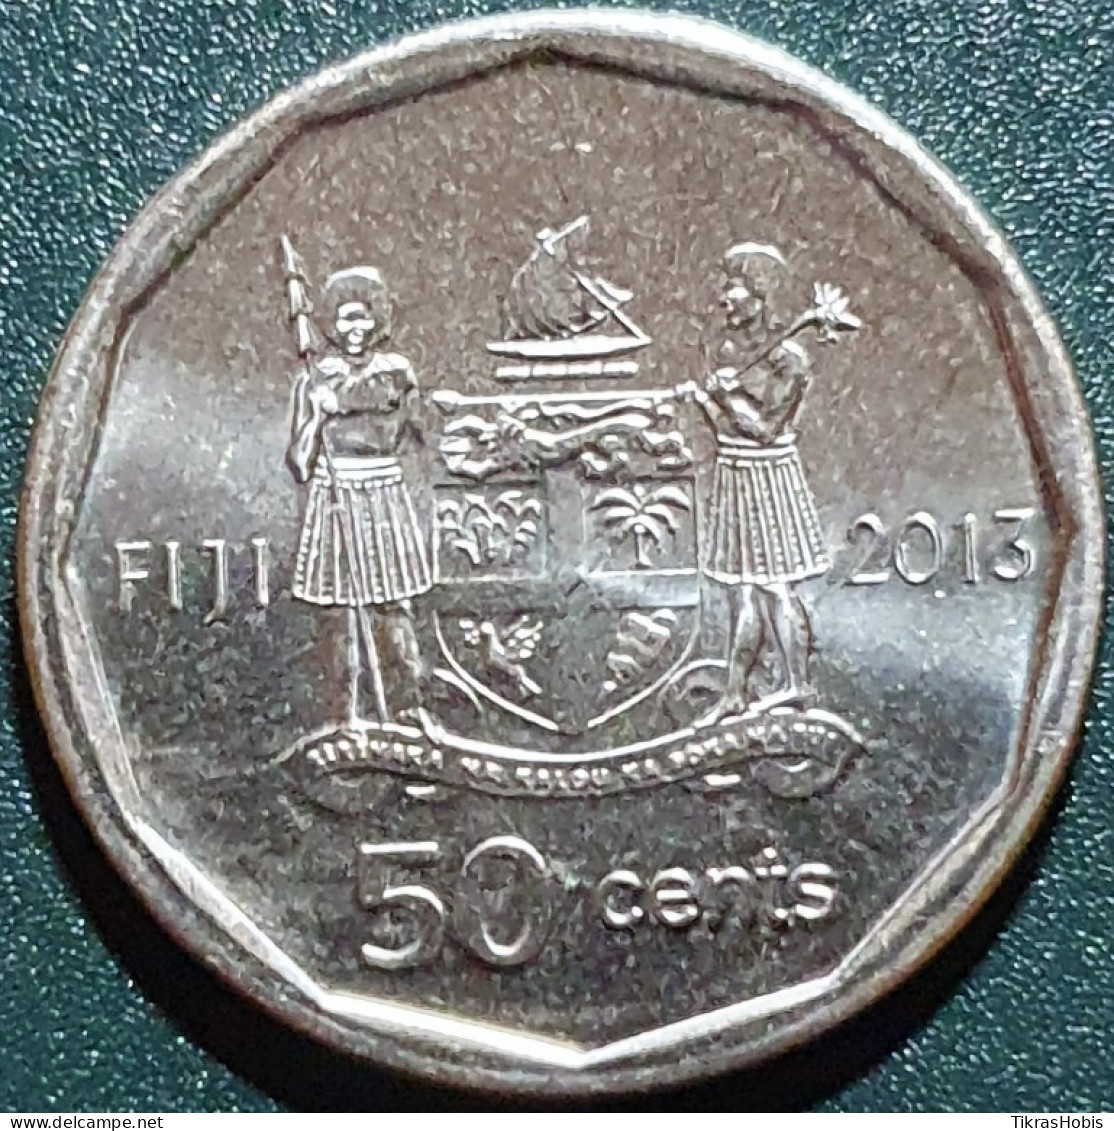 Fiji 50 Cents, 2013 Iliesa Delana KM515 - Fidji